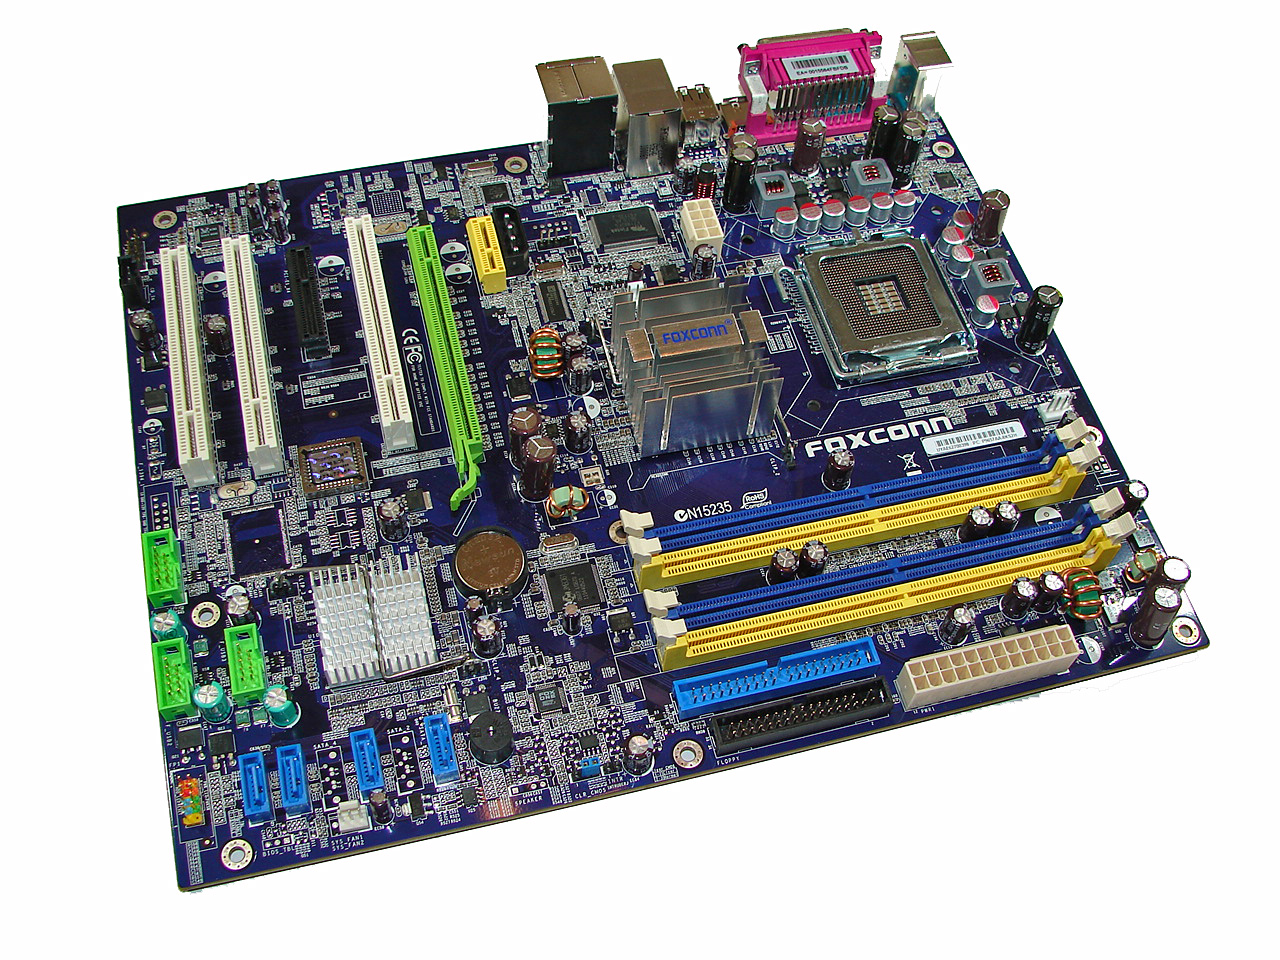 Intel r 6 series chipset. Материнская плата Foxconn 945g7md-8ks2h. Foxconn p9657aa-8ks2h. Материнская плата Foxconn 915g7ad-8ks. Foxconn p9657aa-8ekrs2h.